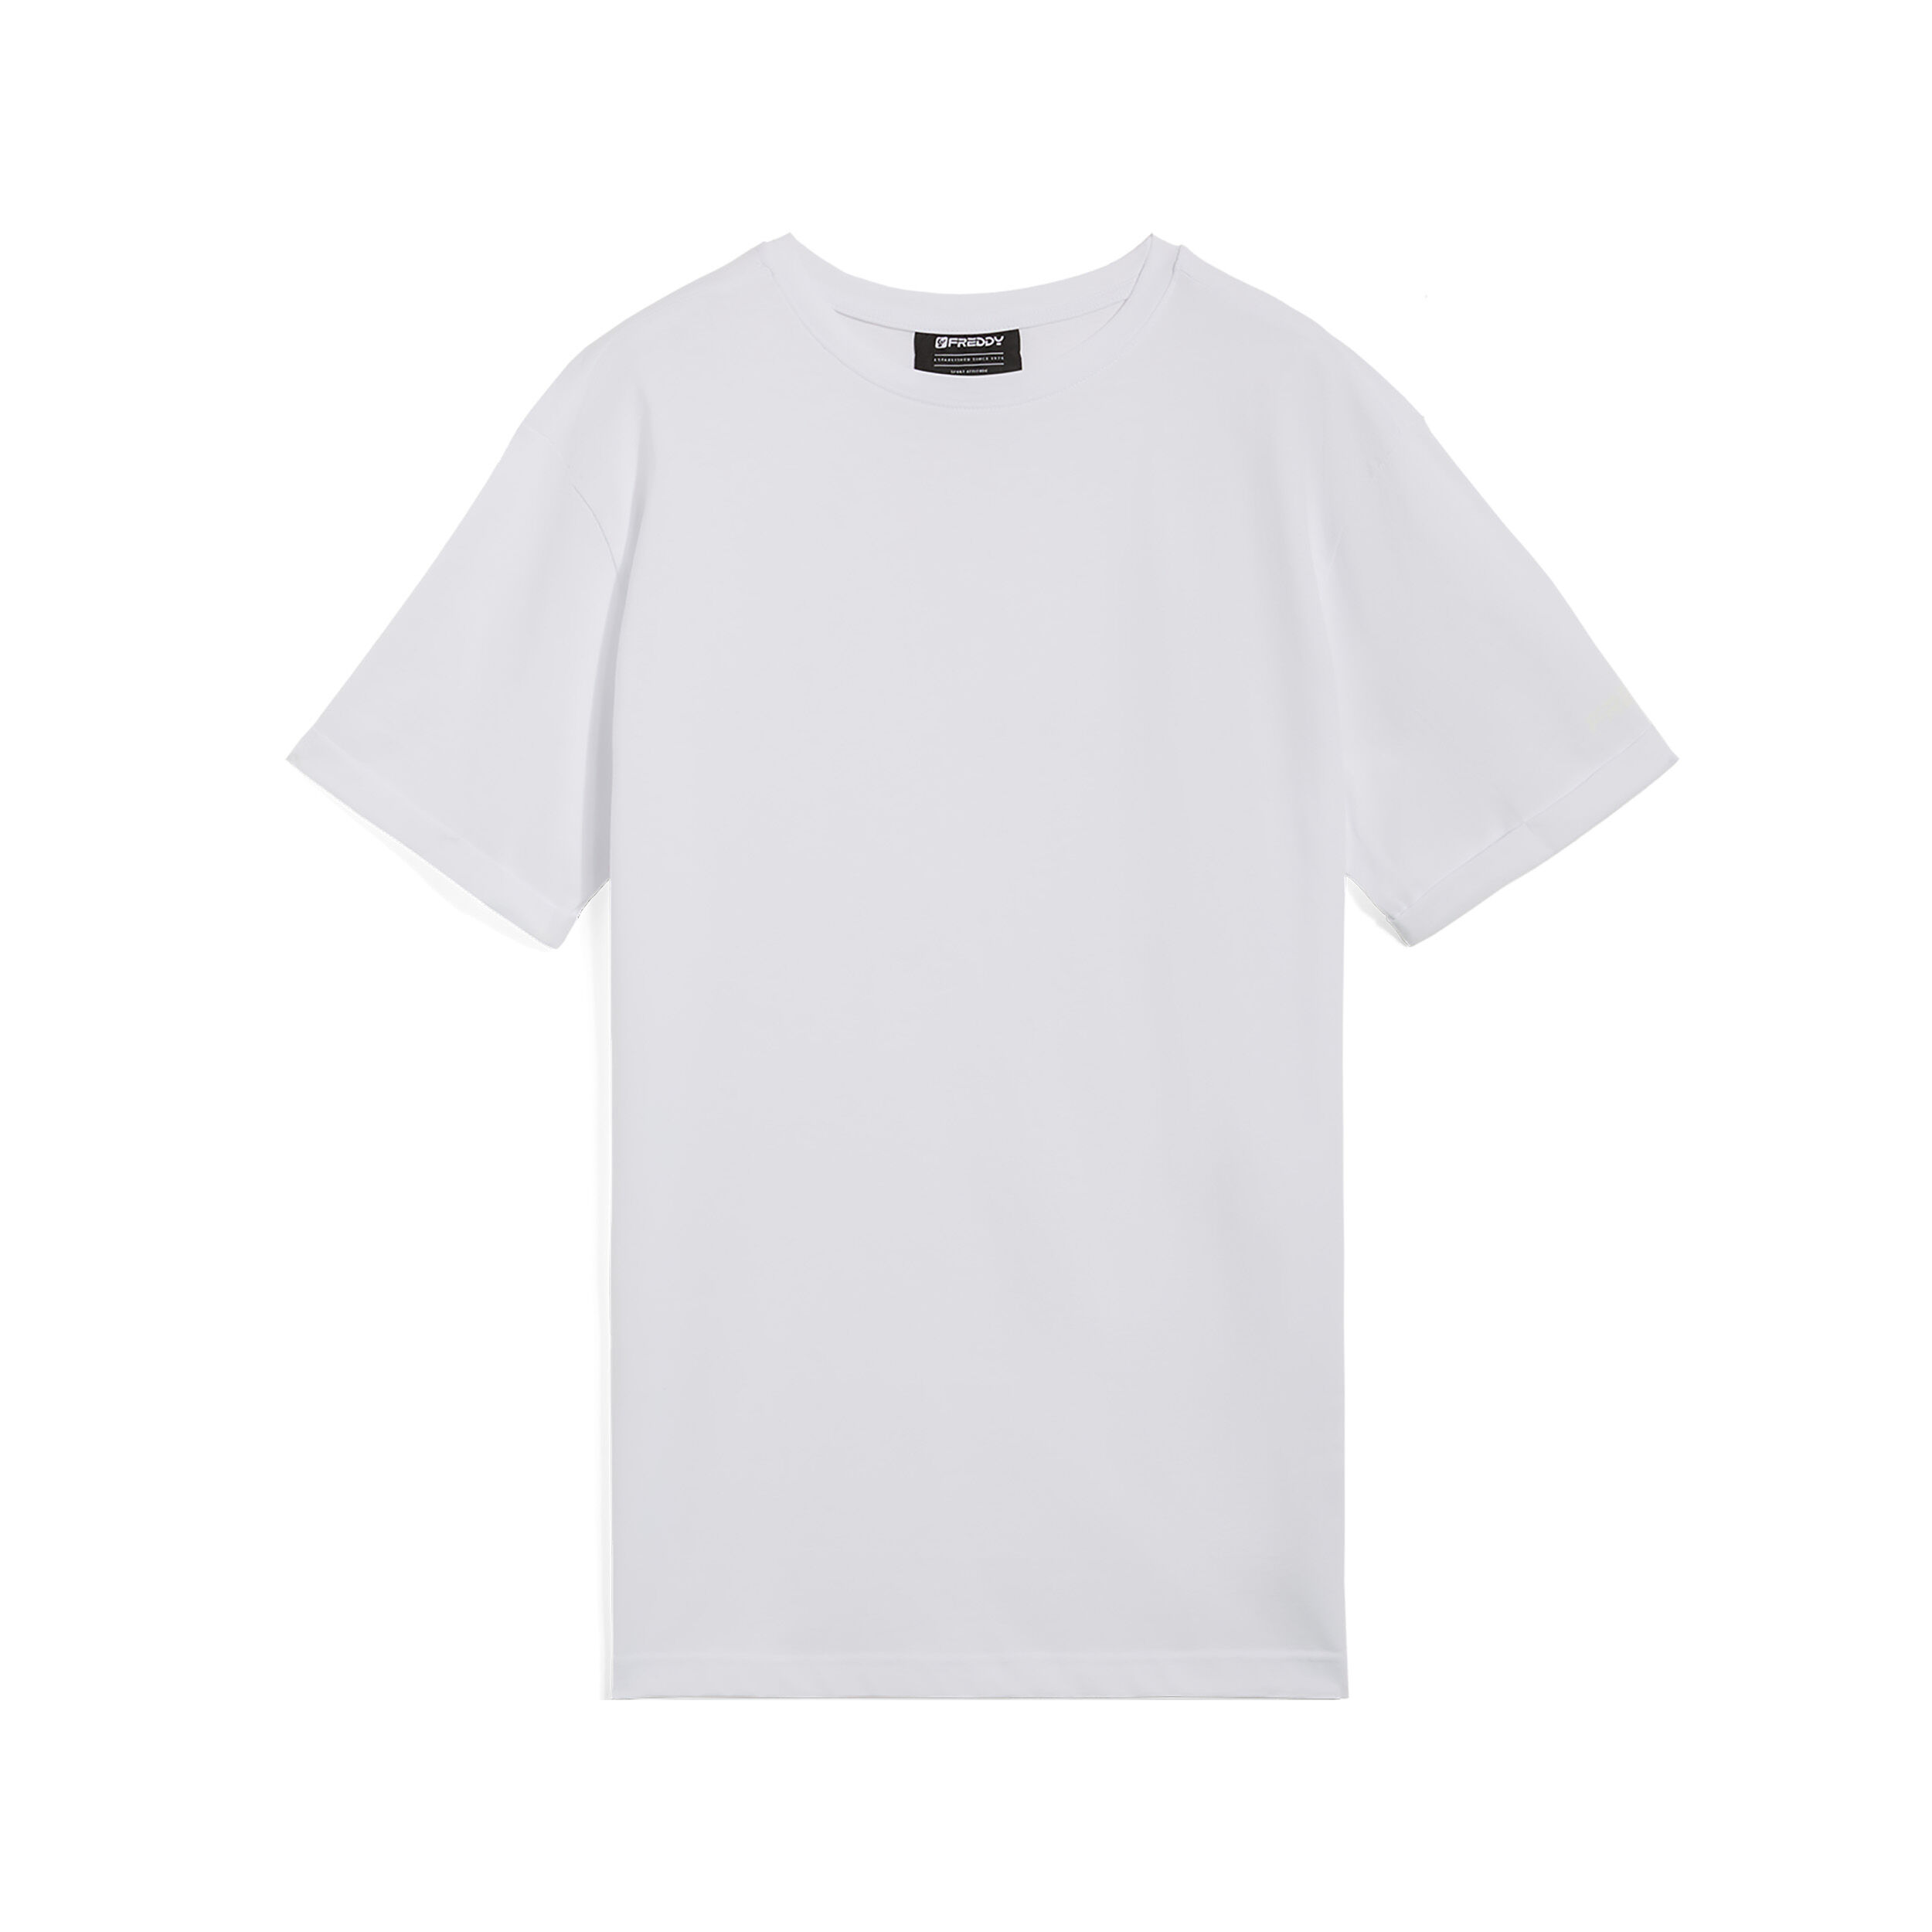 Freddy T-shirt da uomo design essenziale in cotone 100% Bianco Uomo Xxx Large